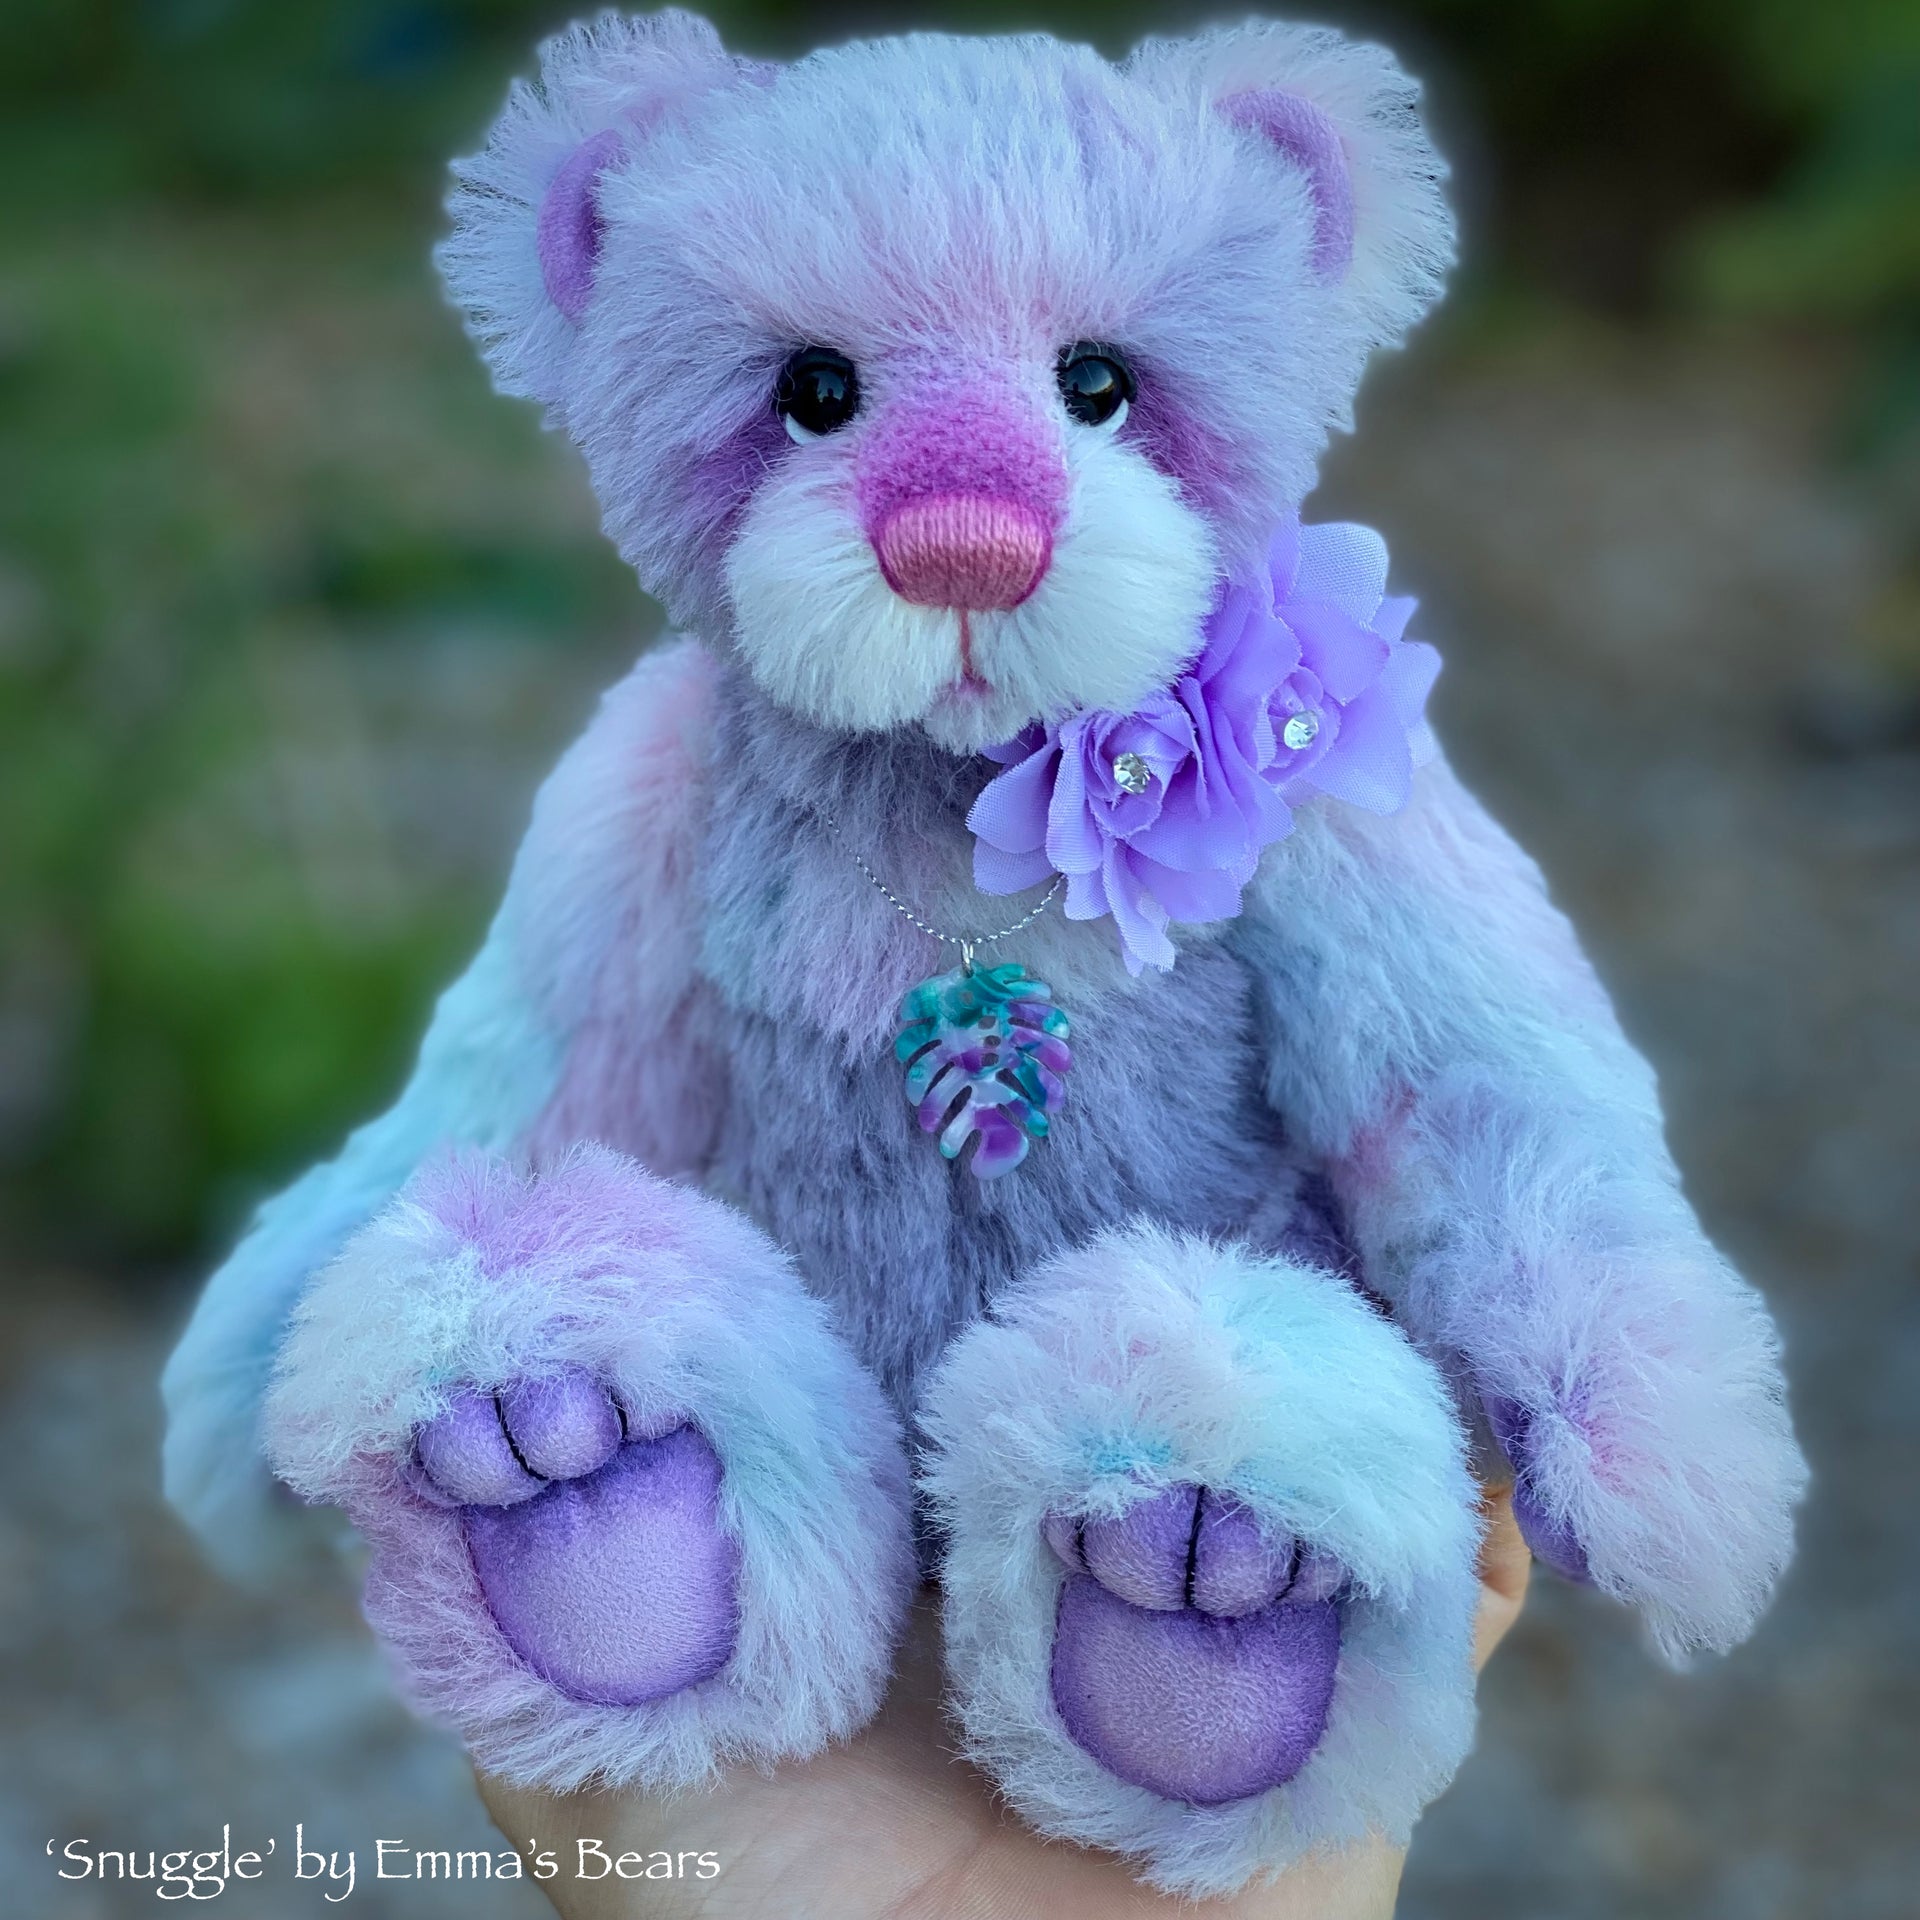 Snuggle - 10" Hand-Dyed alpaca artist bear by Emma's Bears - OOAK